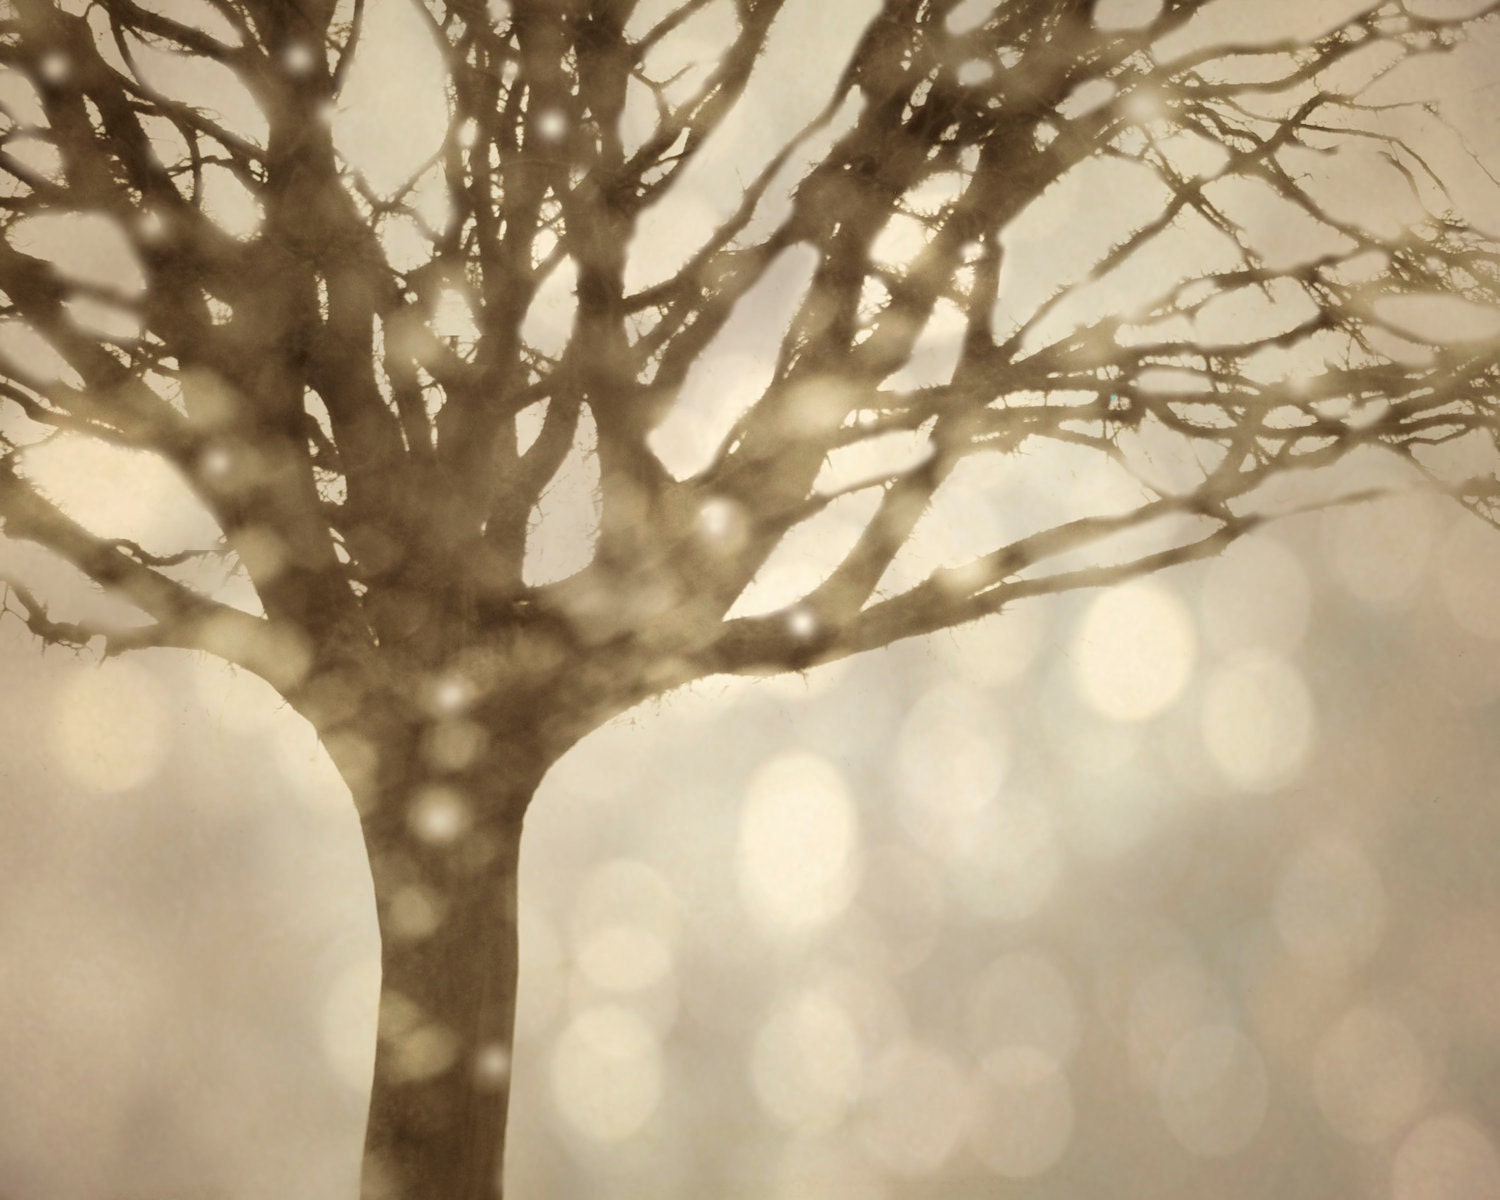 Snow Bokeh Autumn Lights Dreamy Beige Tan Tree 8x10 Photography Print - LTphotographs